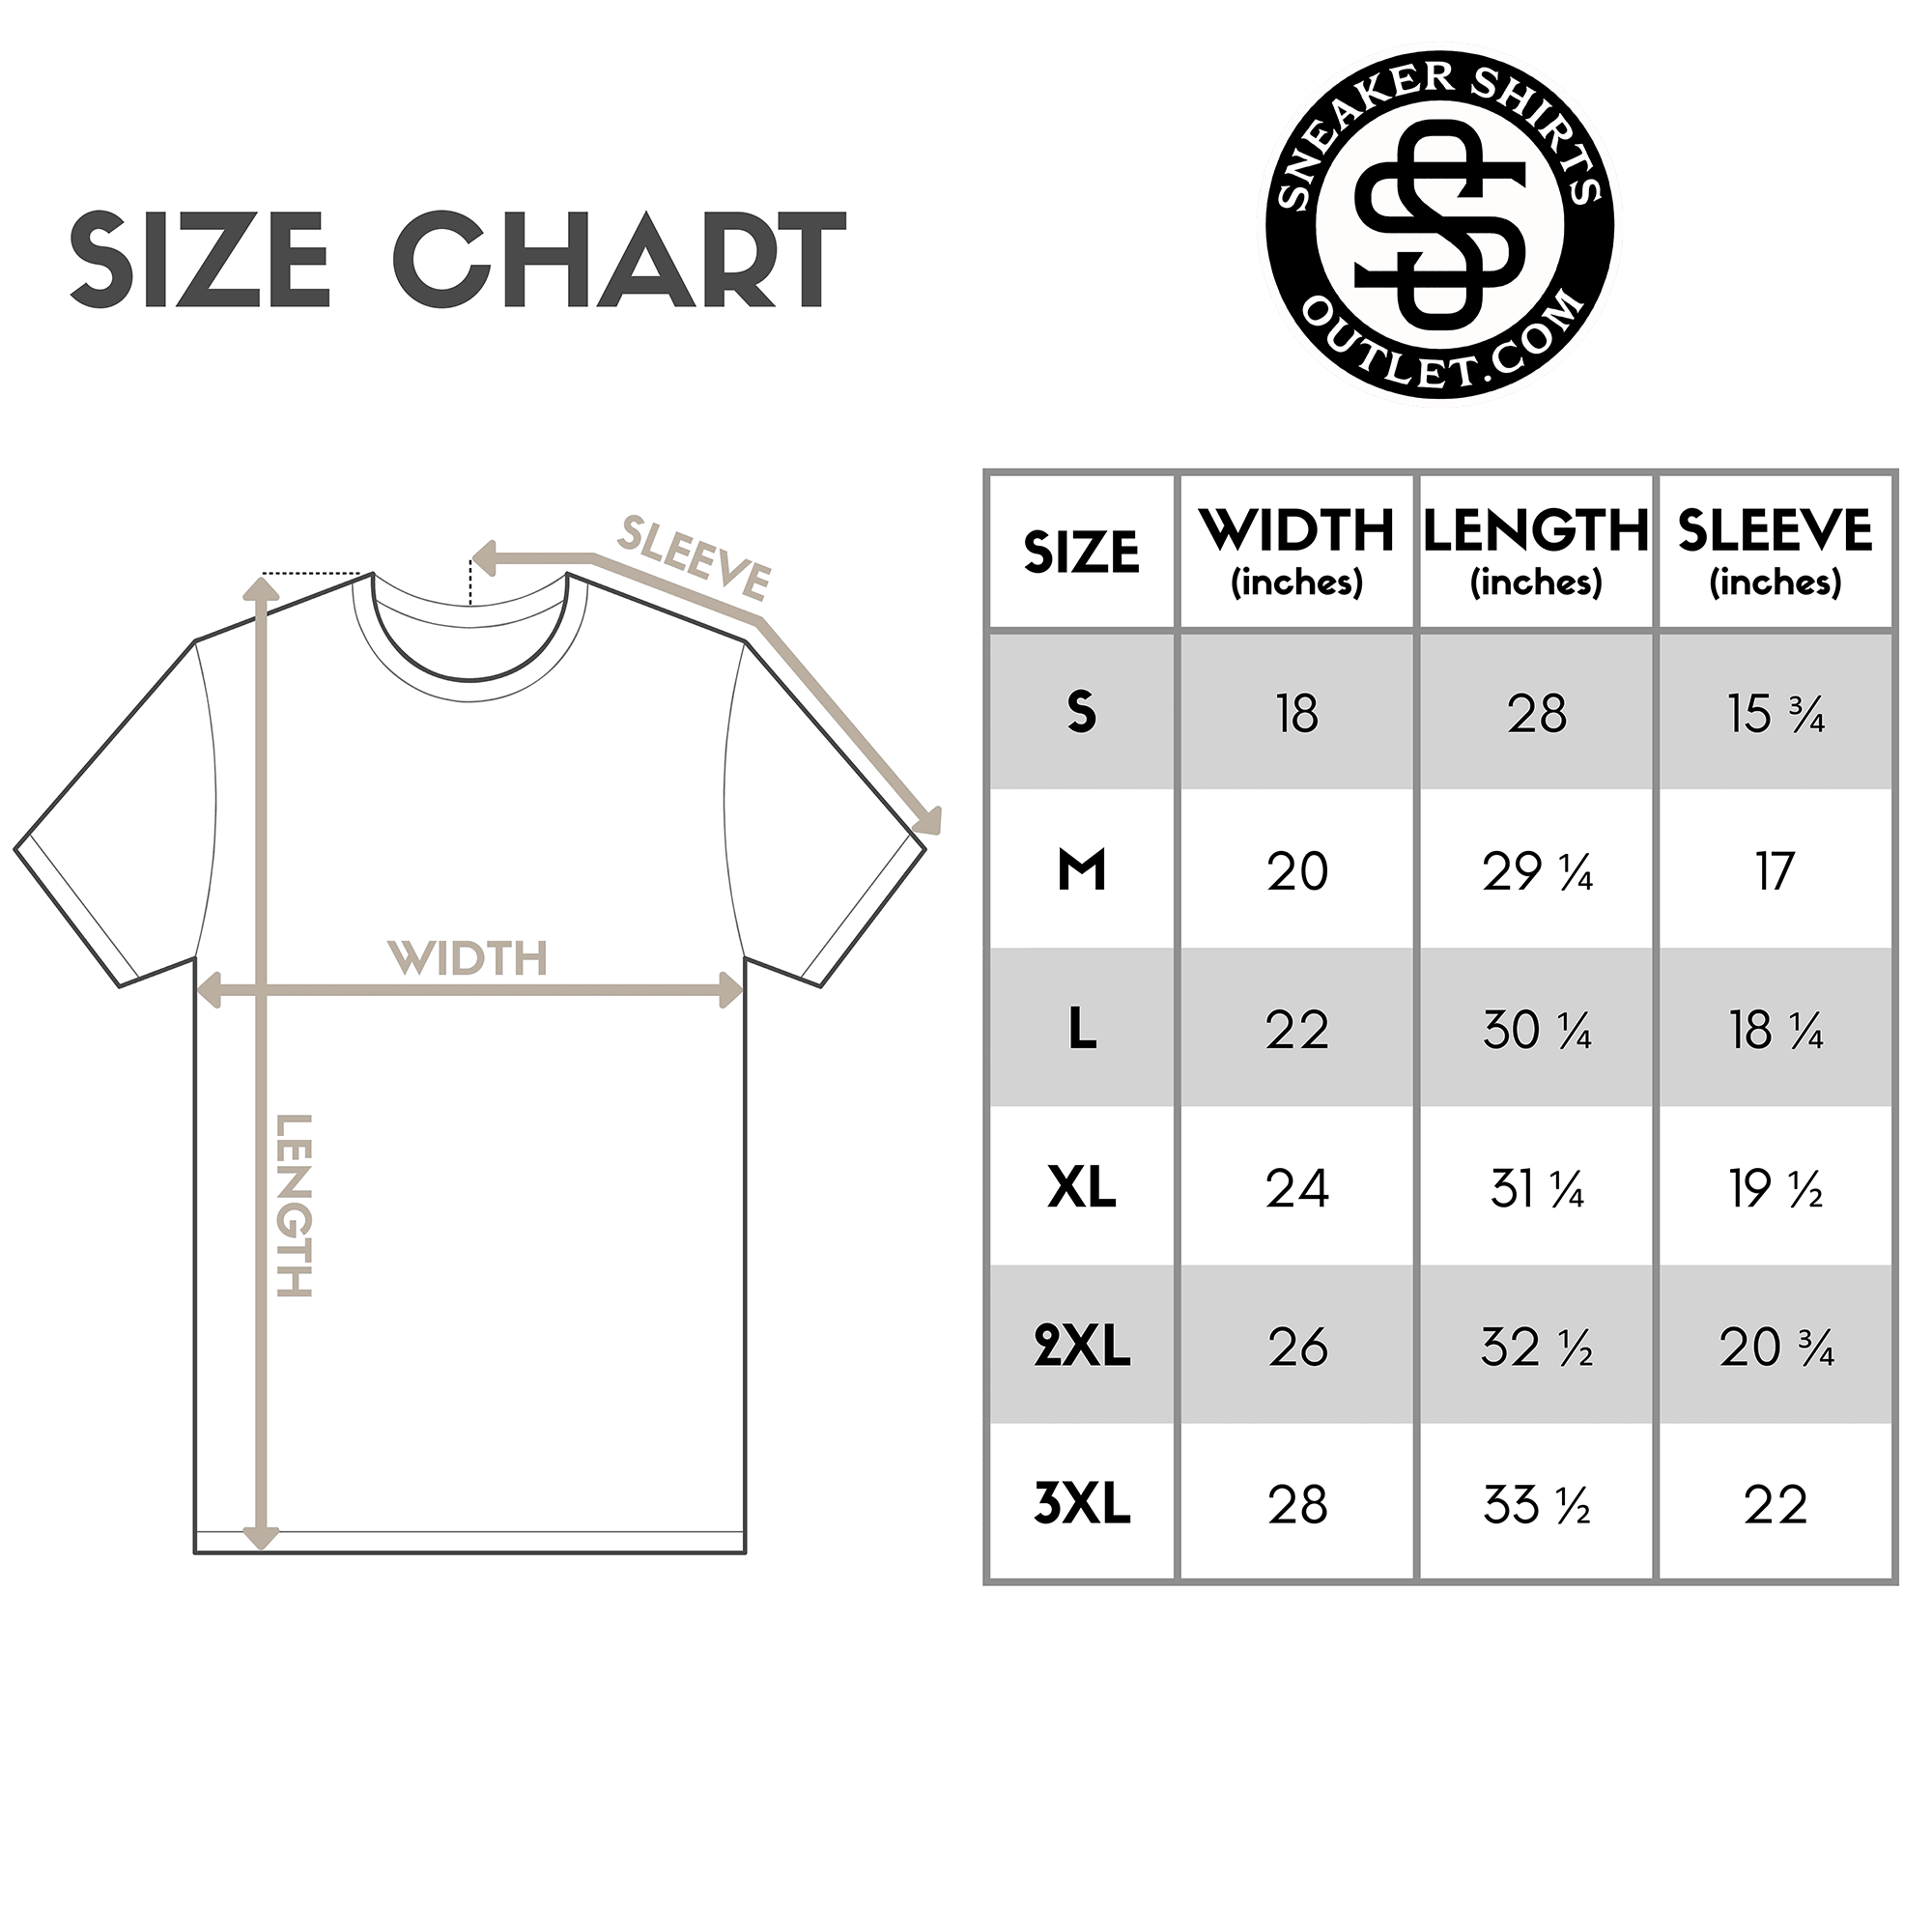 I Shine Different Shirt size chart photo